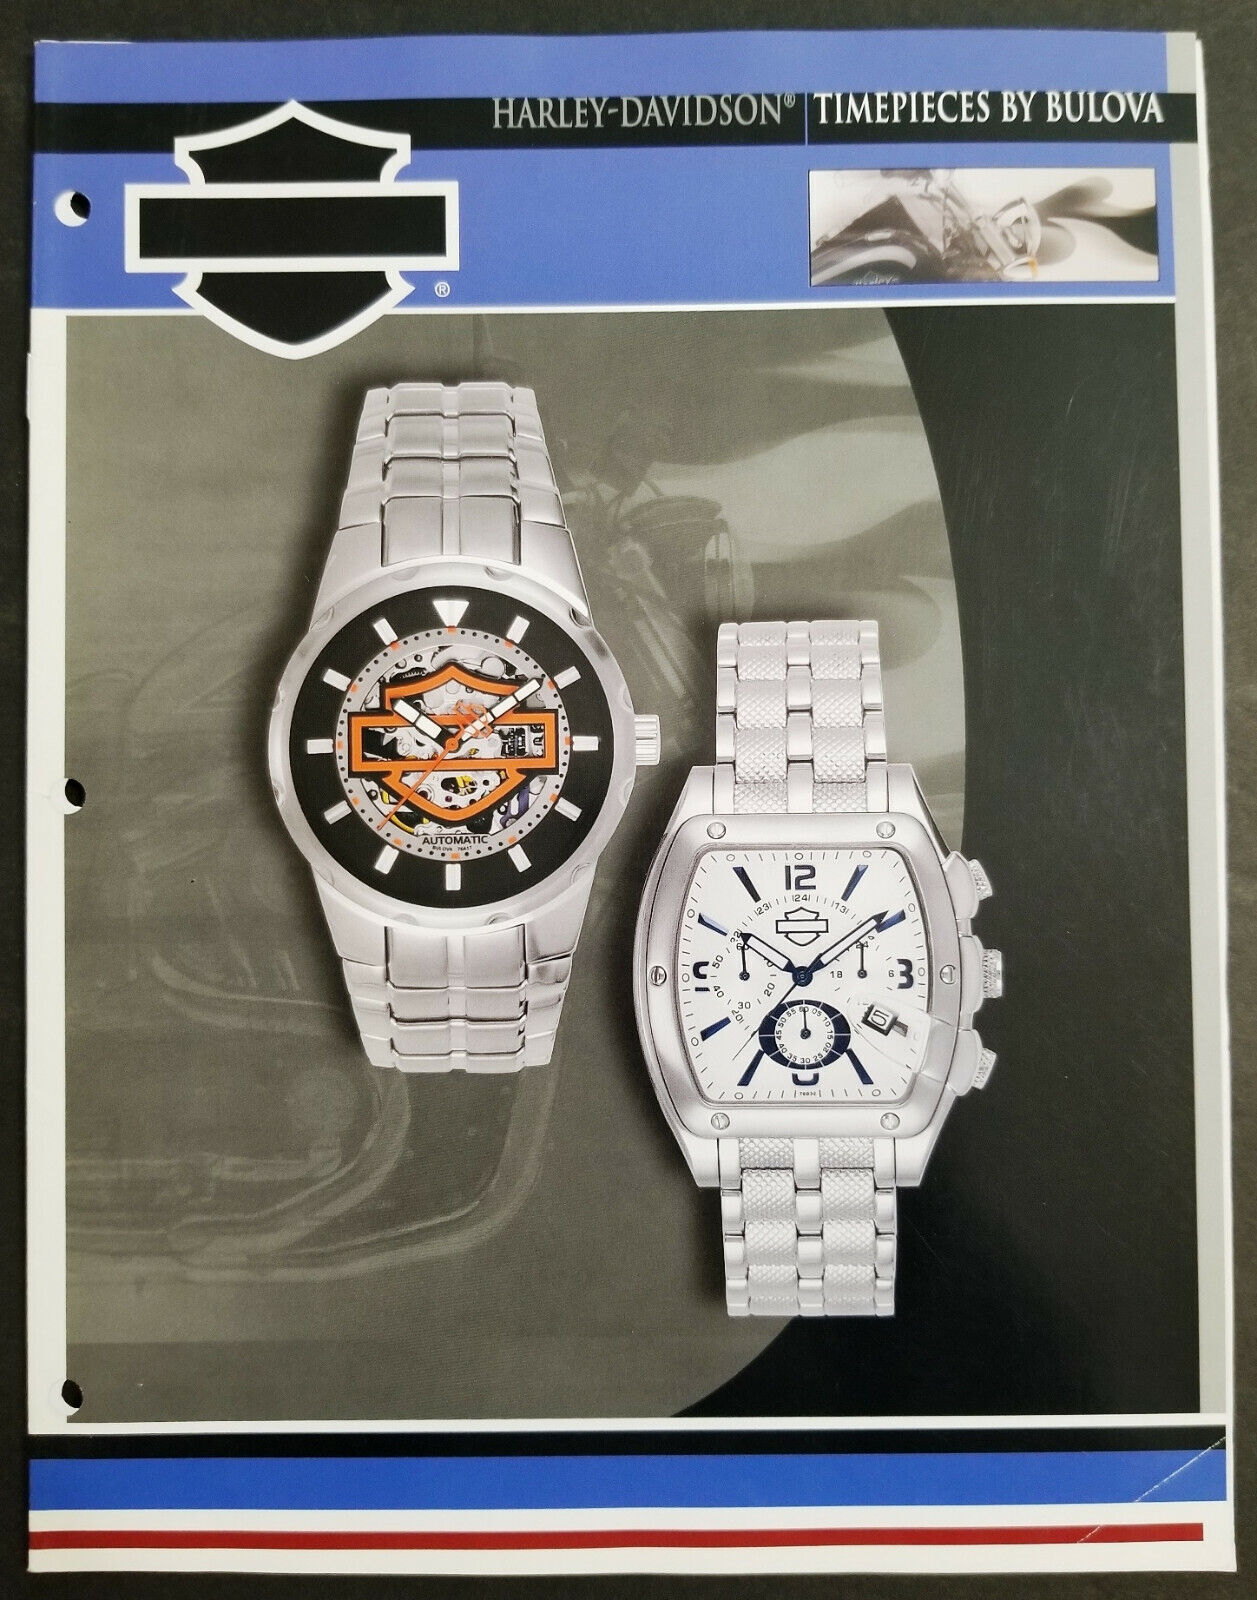 2006 Harley Davidson Timepieces By Bulova Dealer Sales Catalog